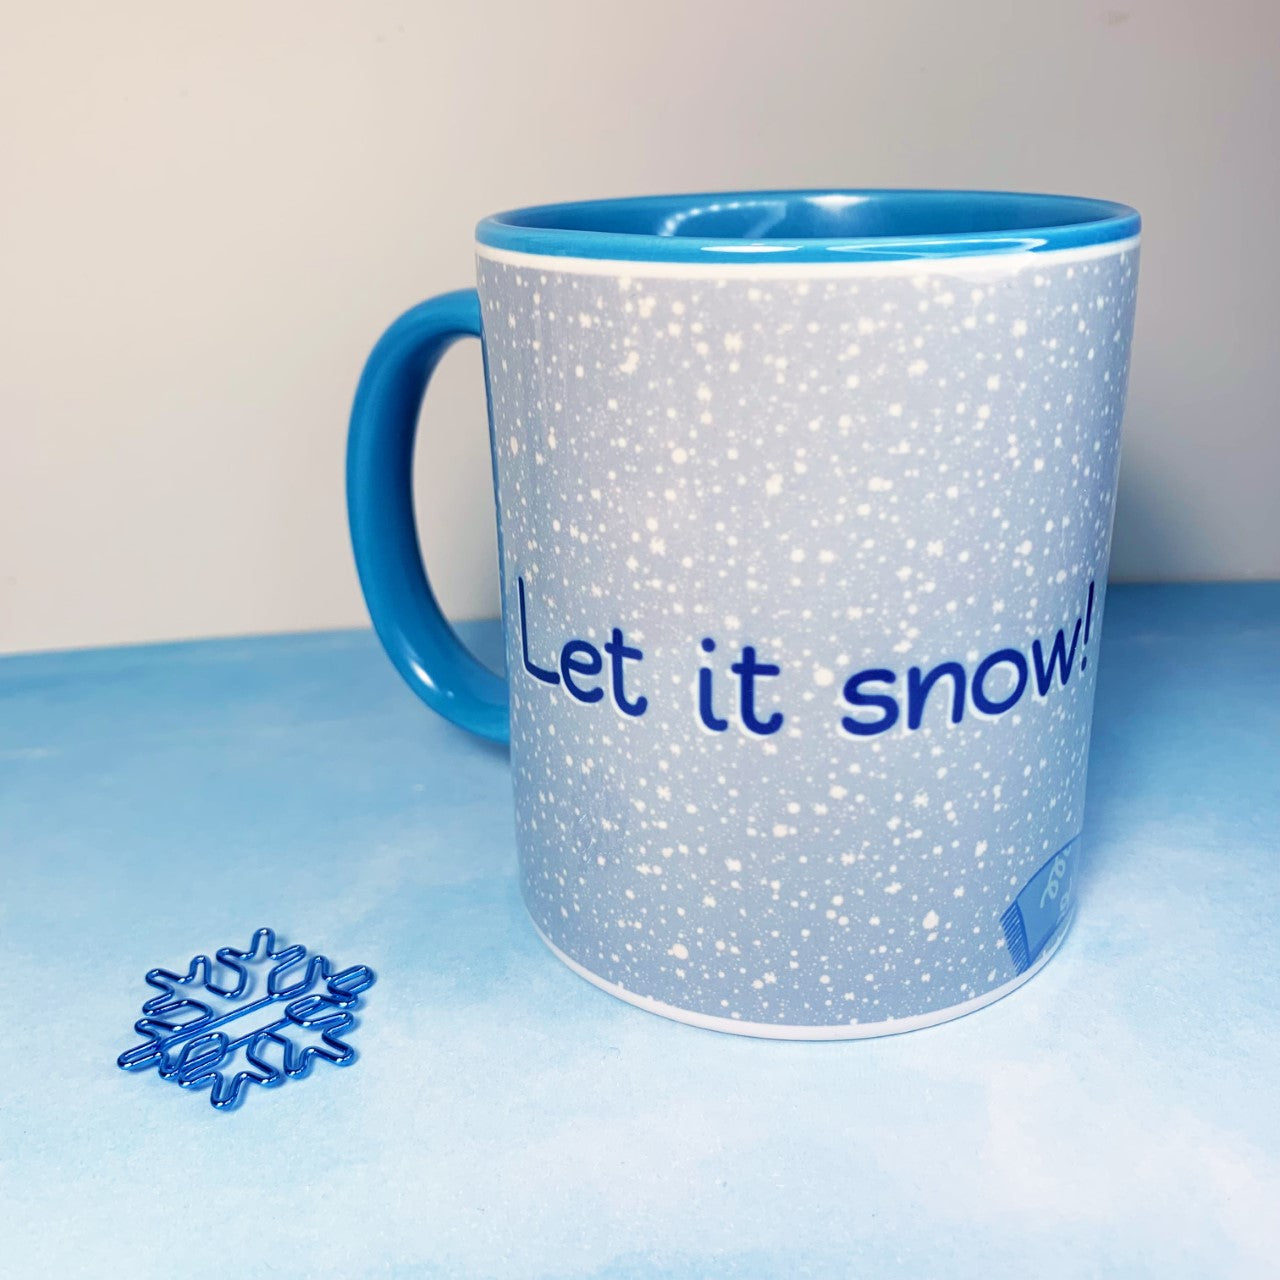 Winter penguin - Let it snow! - 350ml Mug